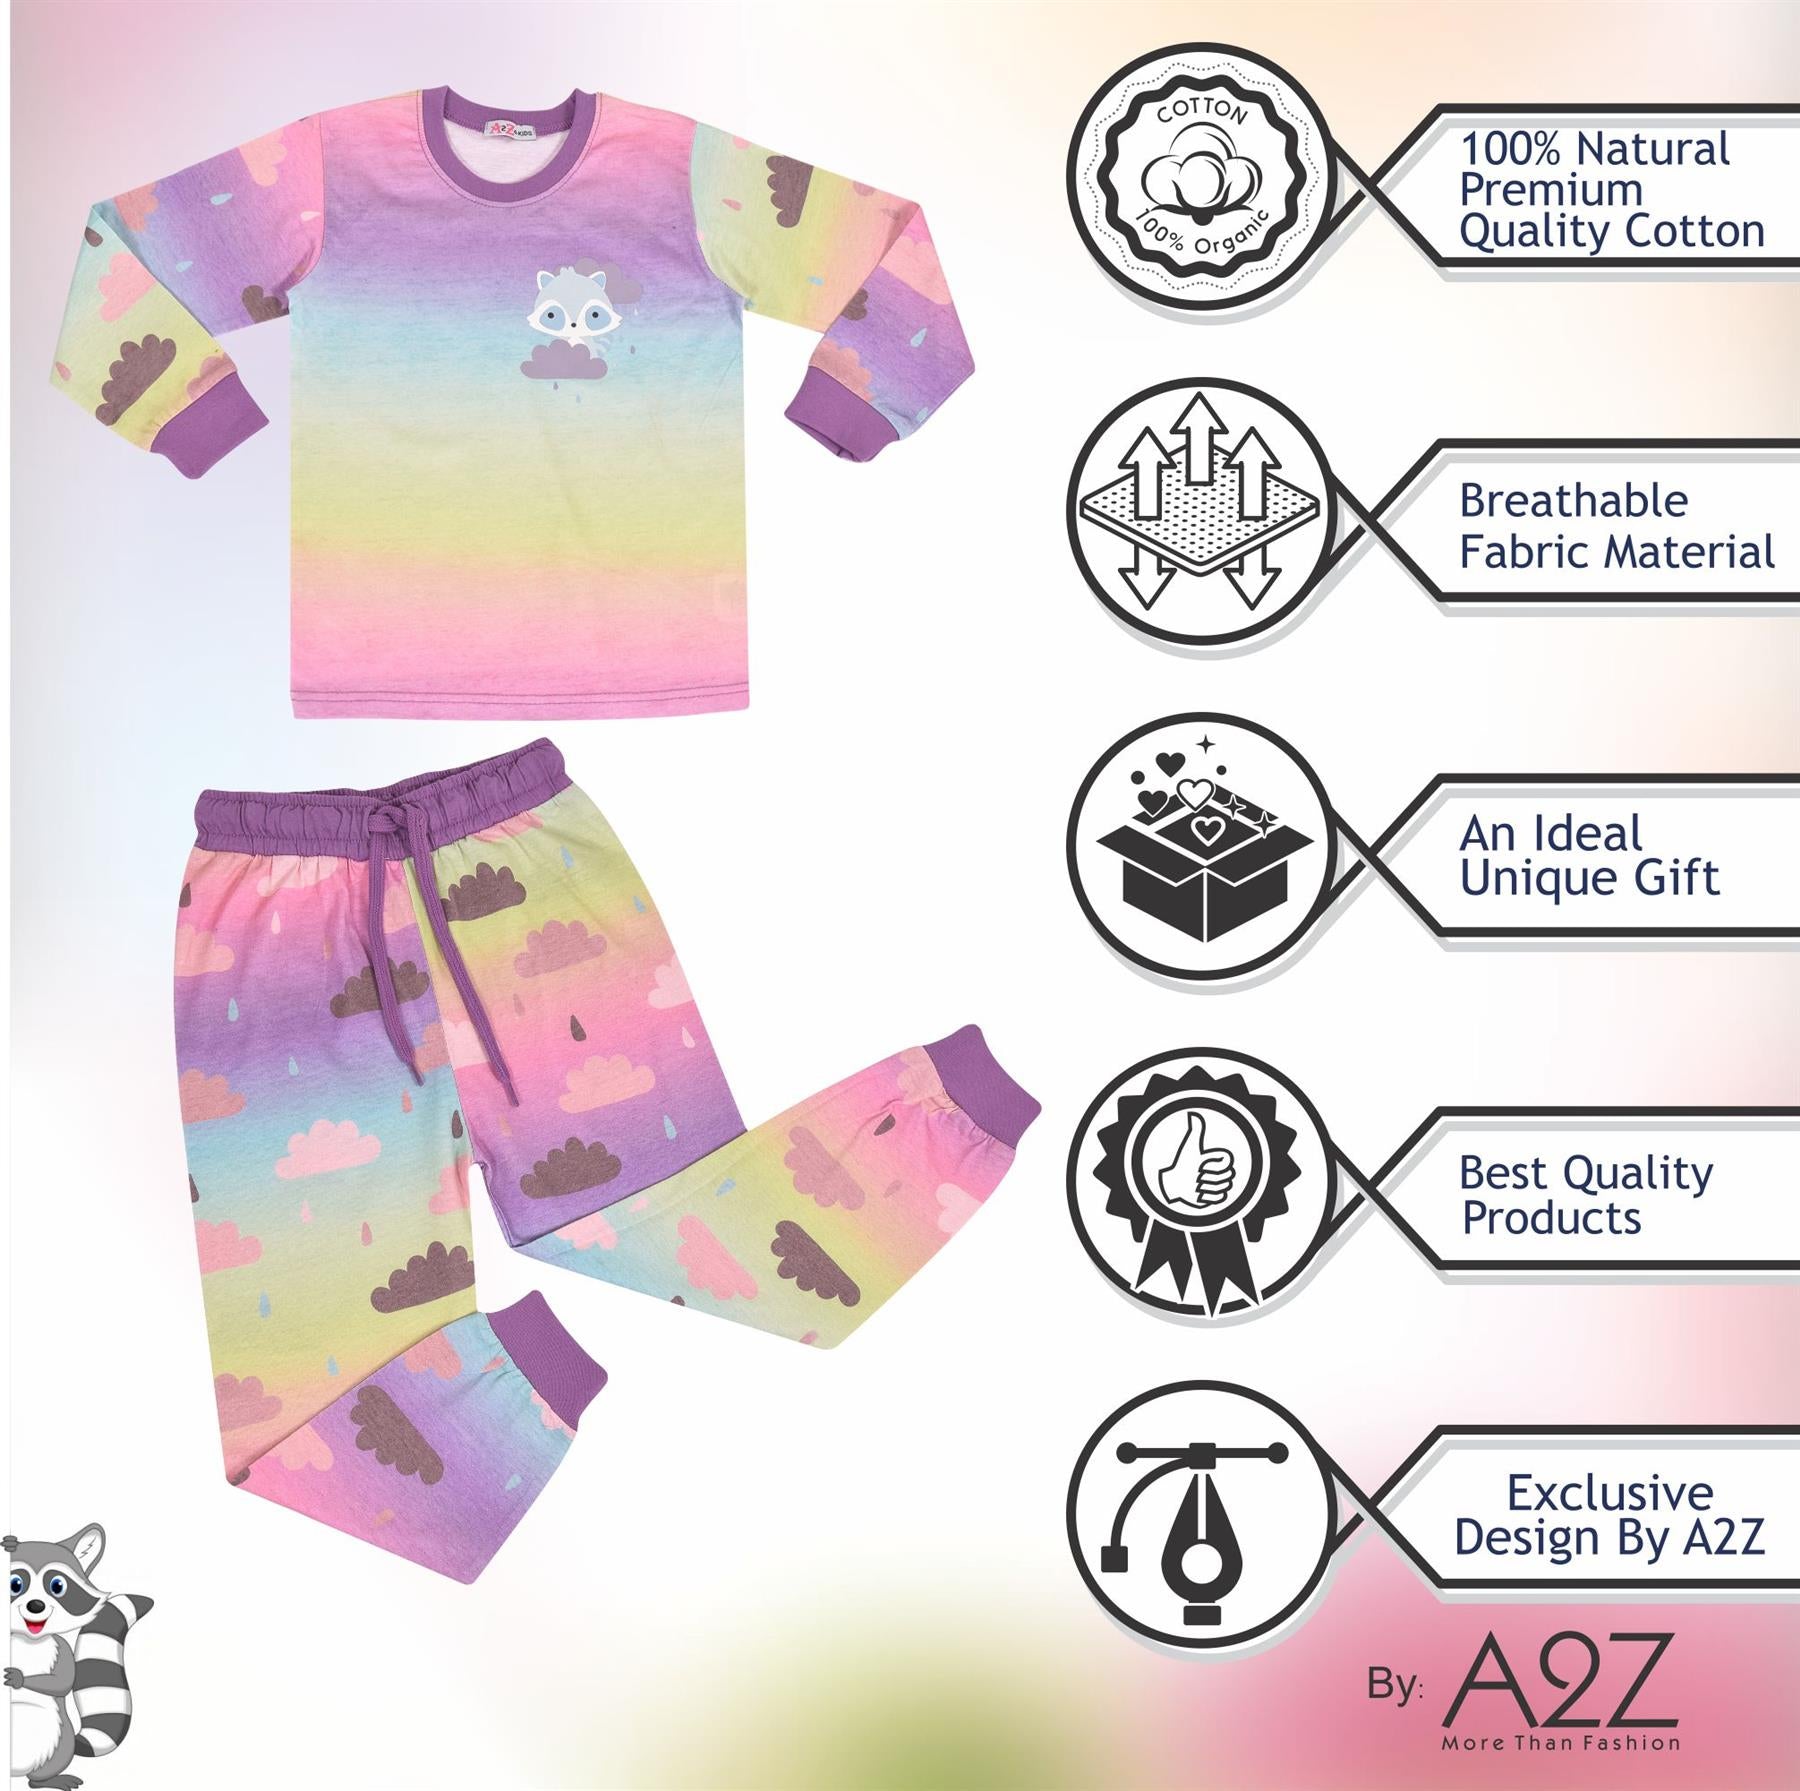 Kids Girls Cloud Print Pyjamas Set